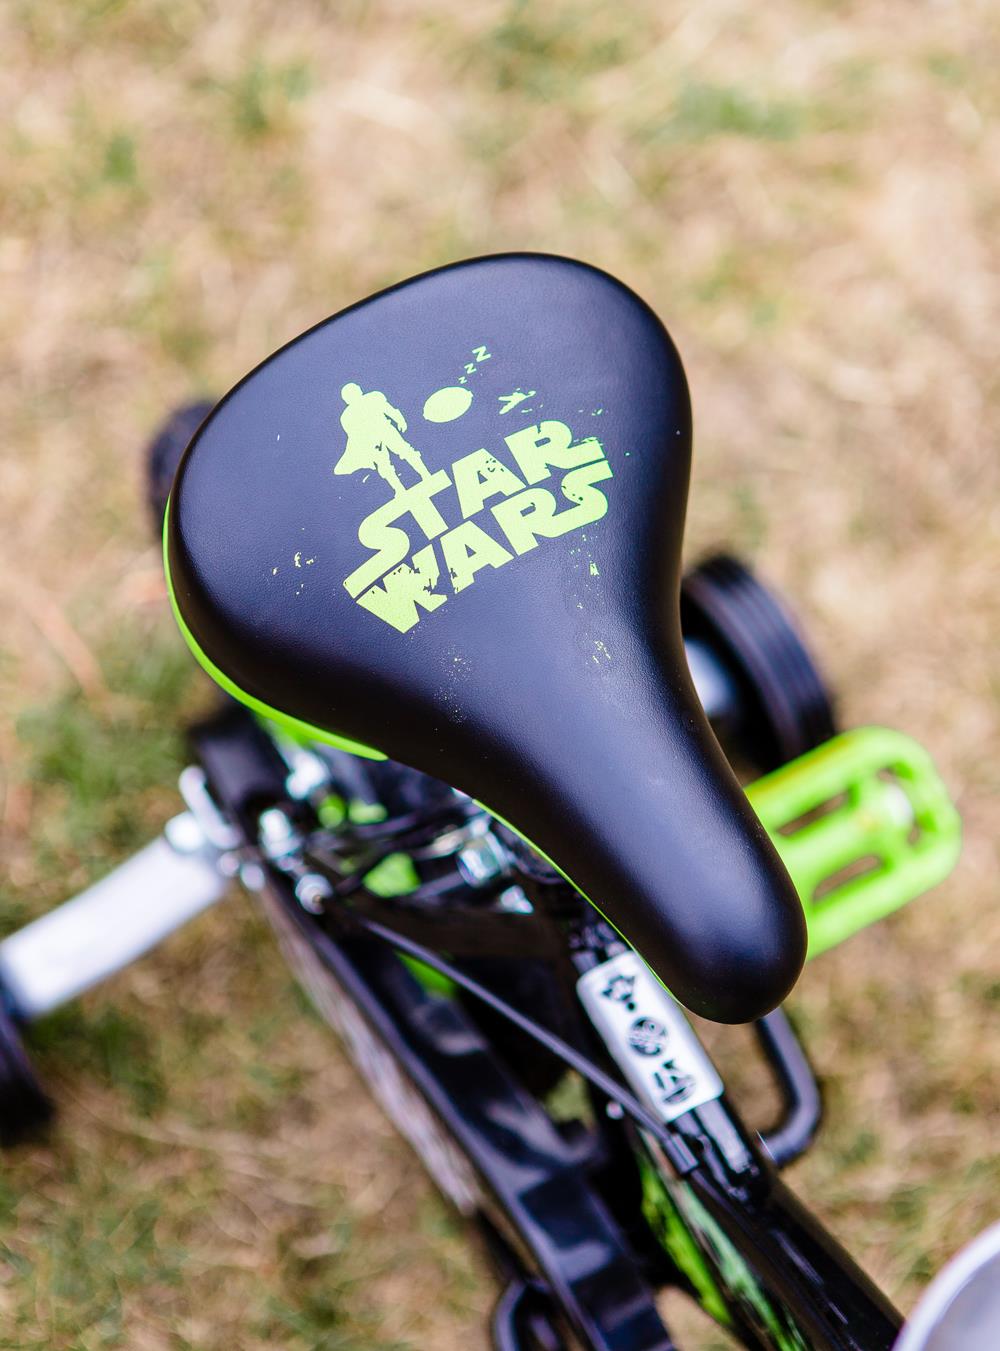 Huffy Star Wars 12" Детский велосипед